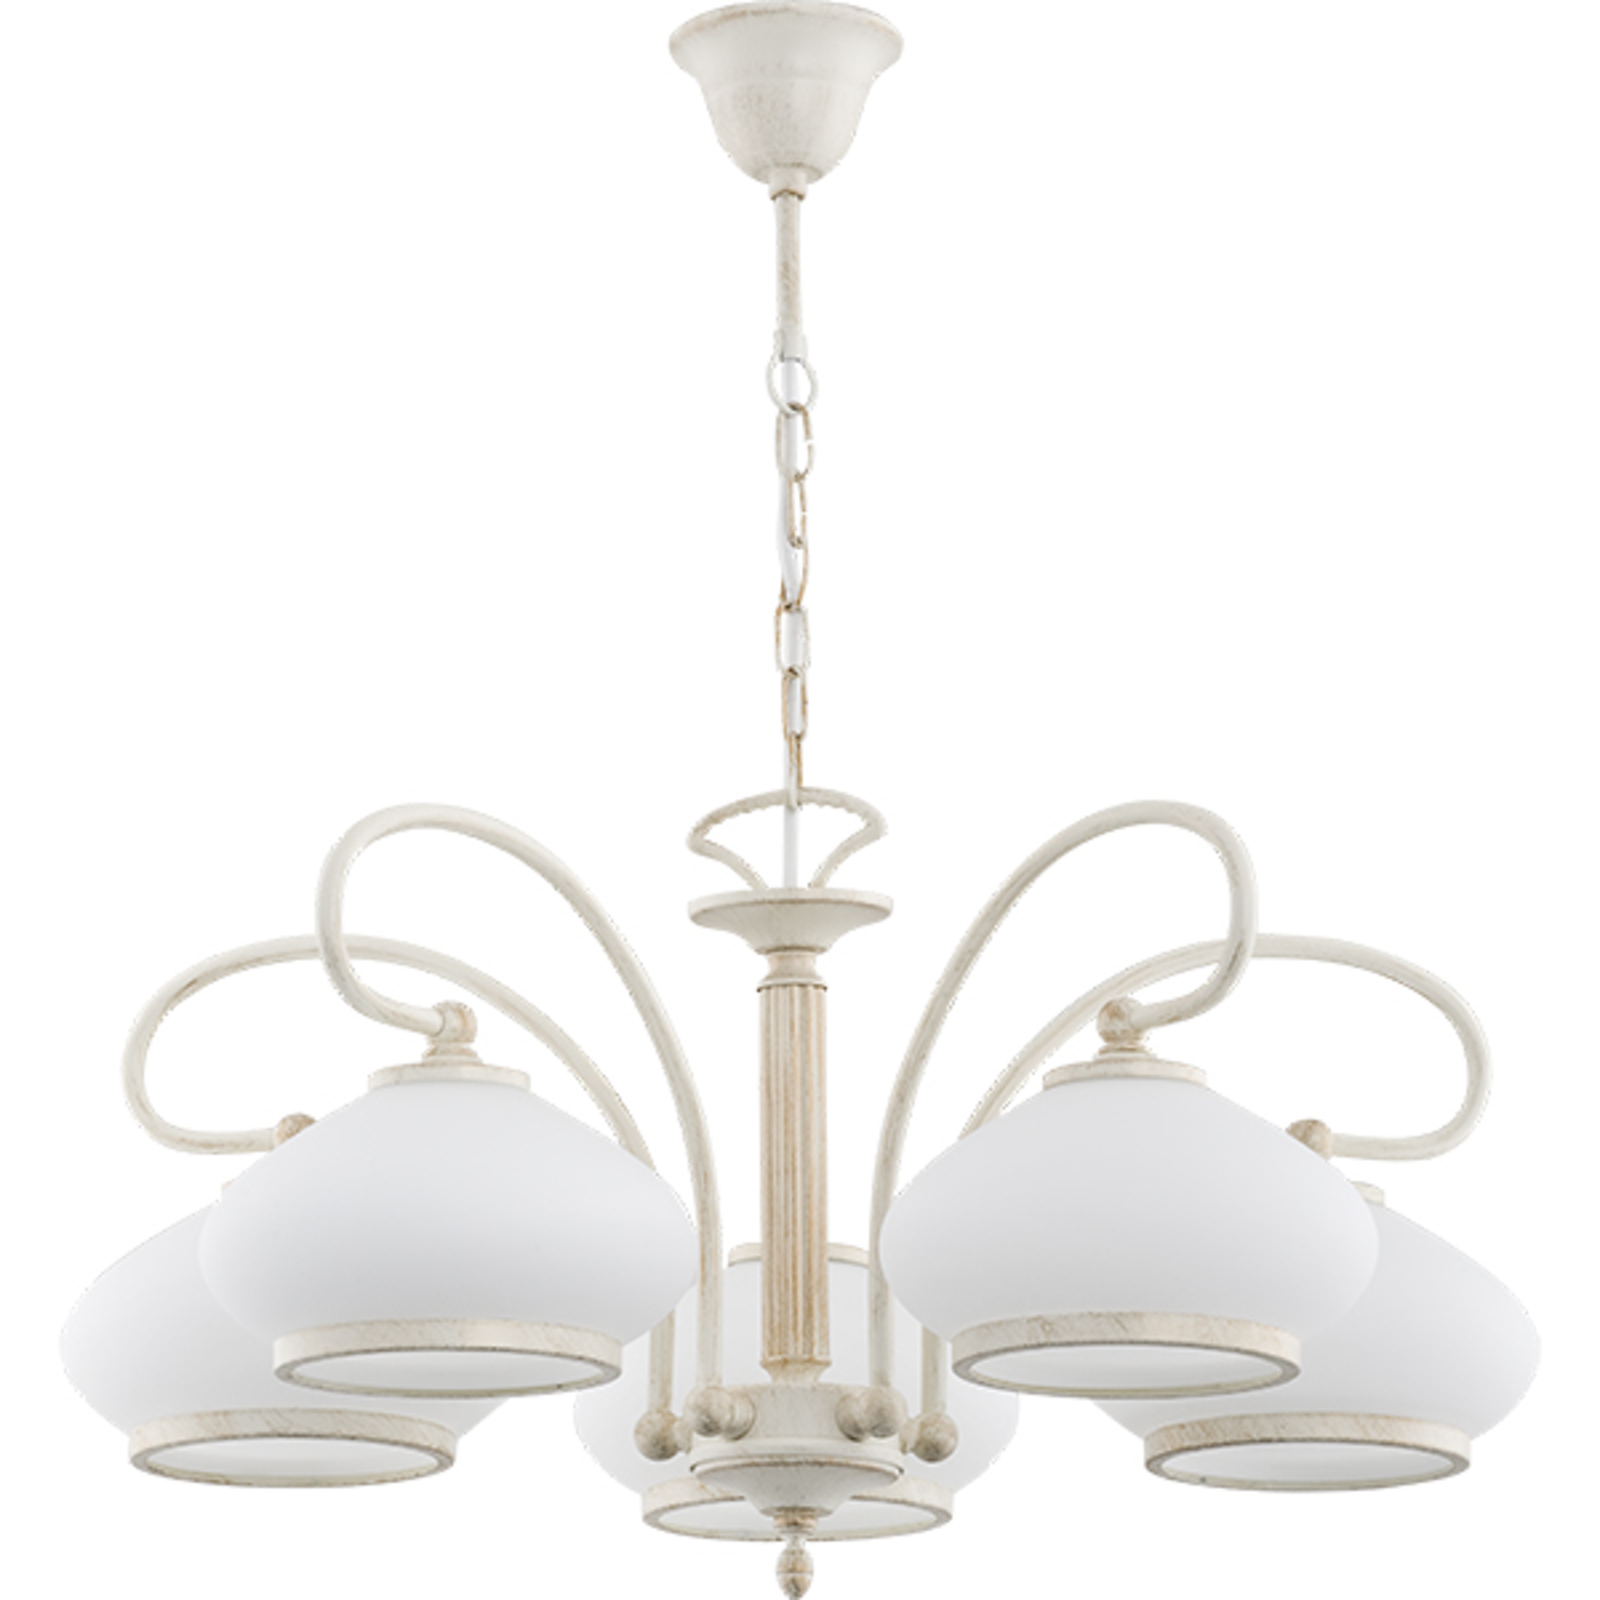 Astoria chandelier, glass lampshades 5-bulb, white